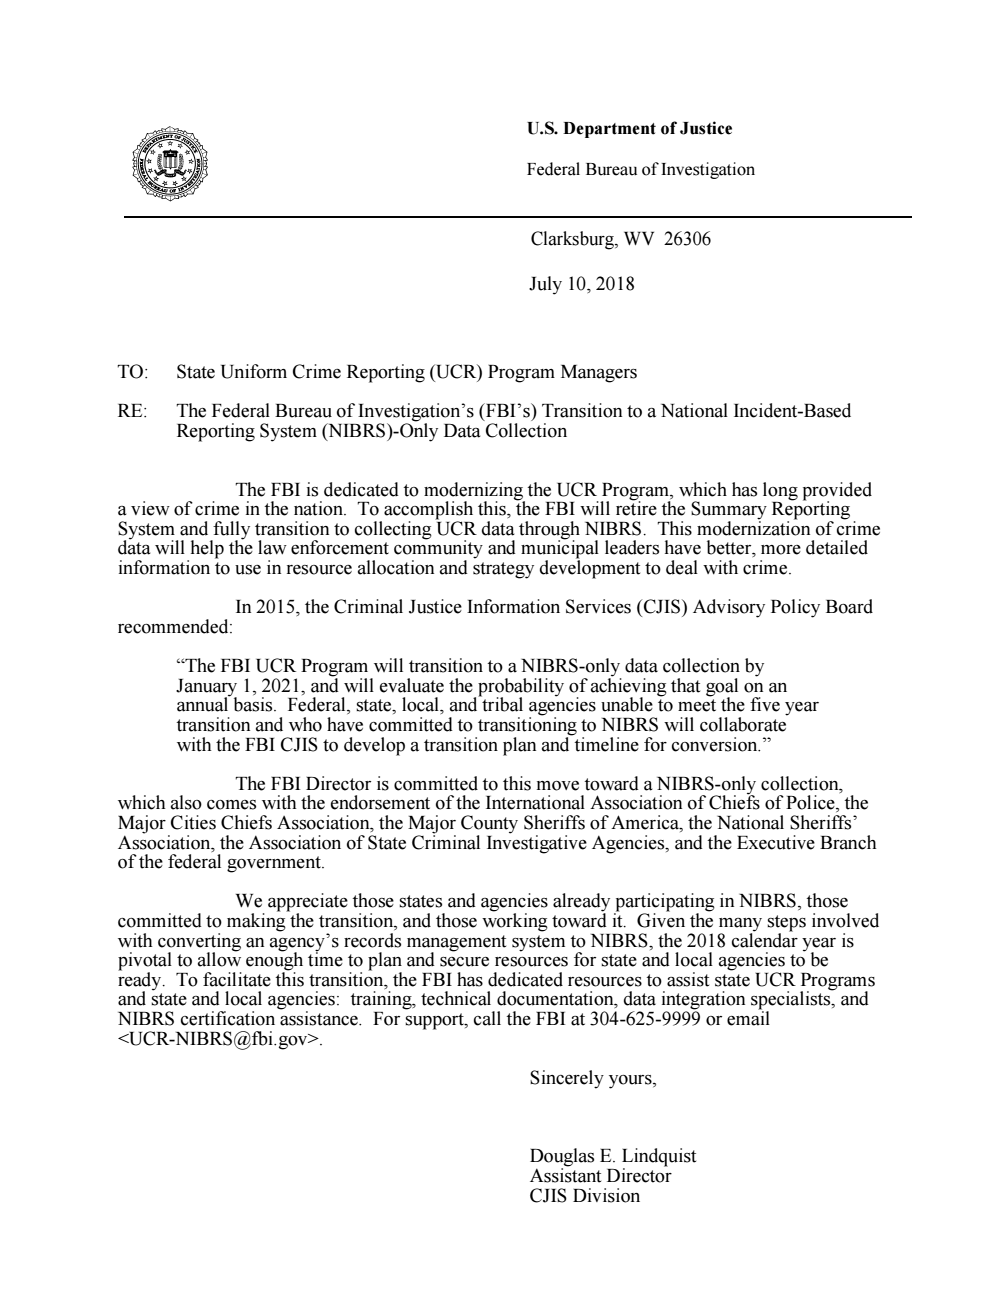 FBI Letter on NIBRS Transition — FBI